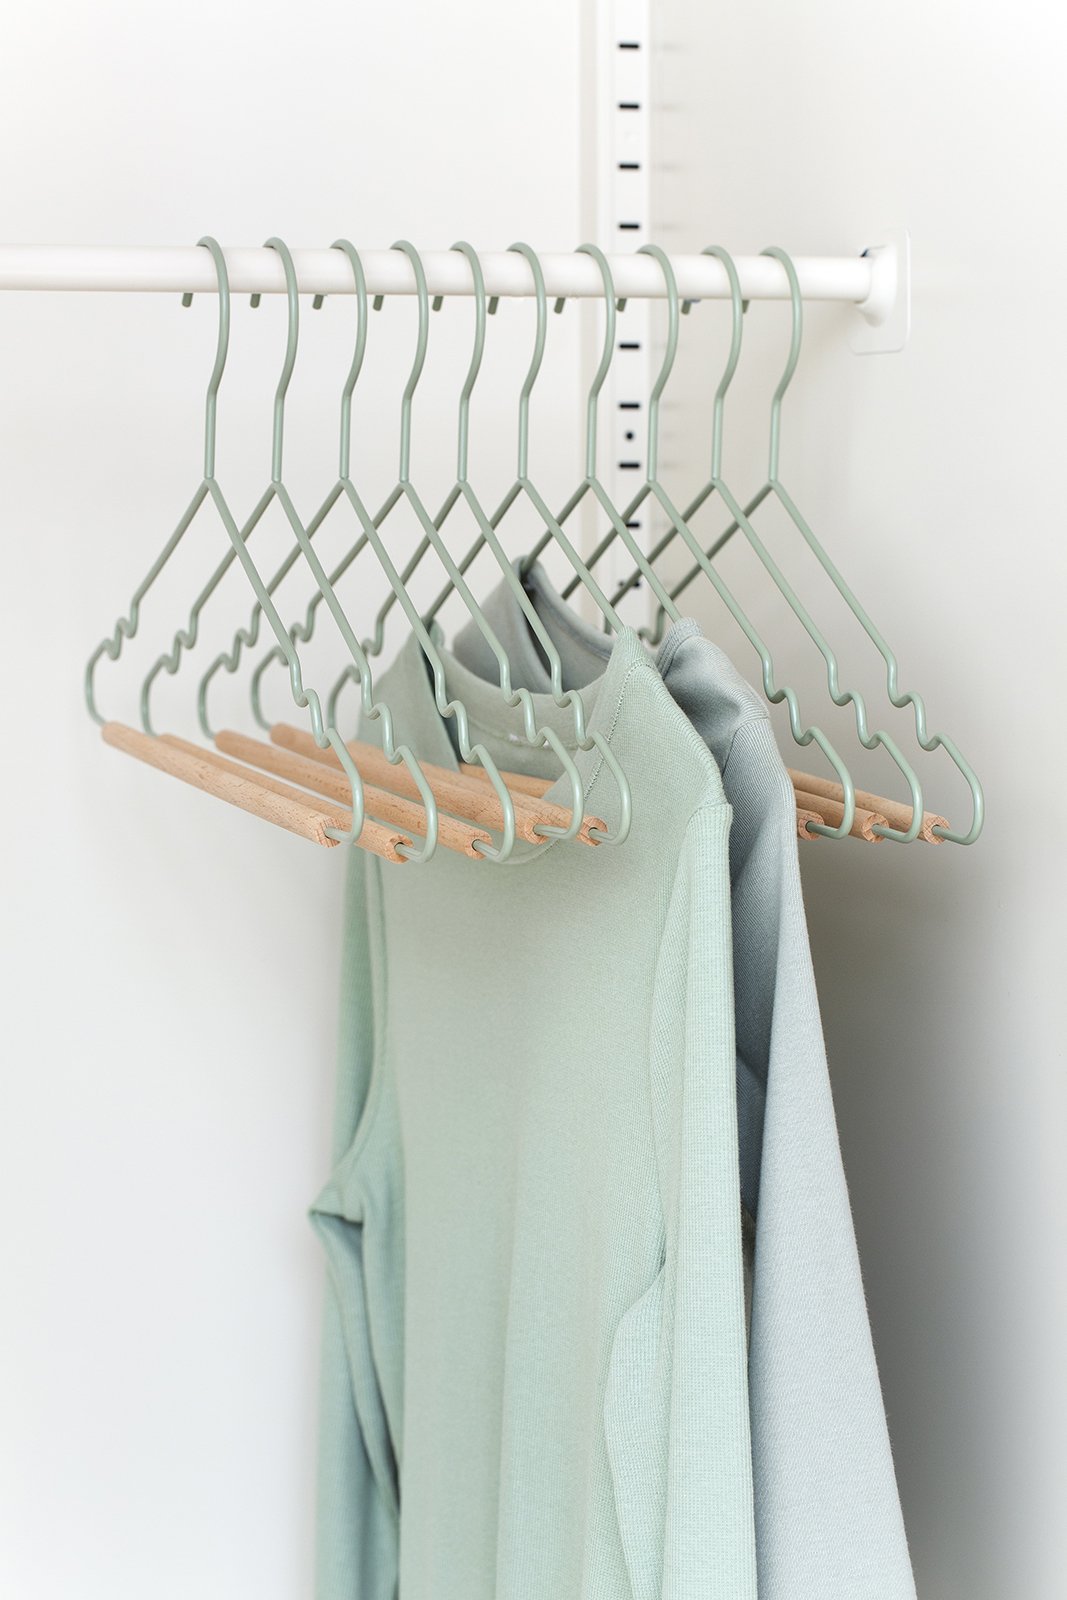 Adult Top Hangers- Choose your colour